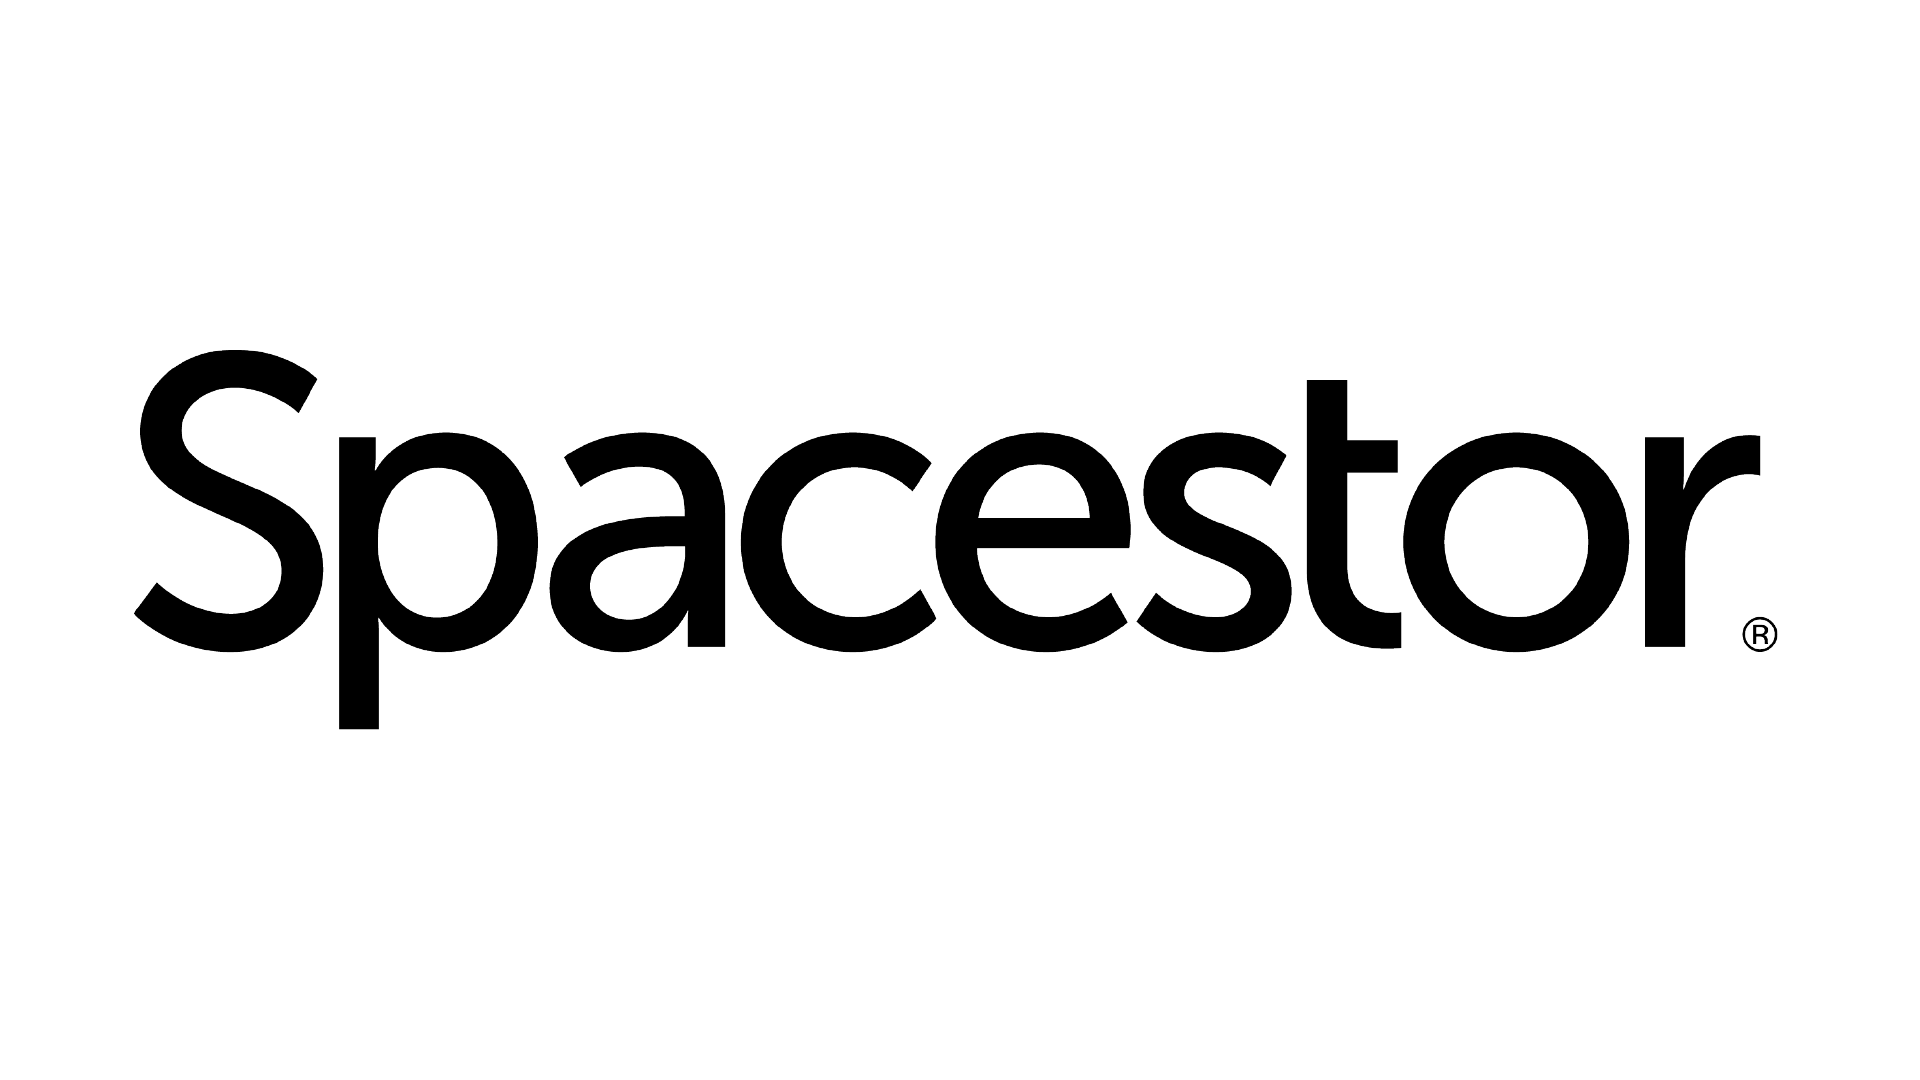 Spacestor logo